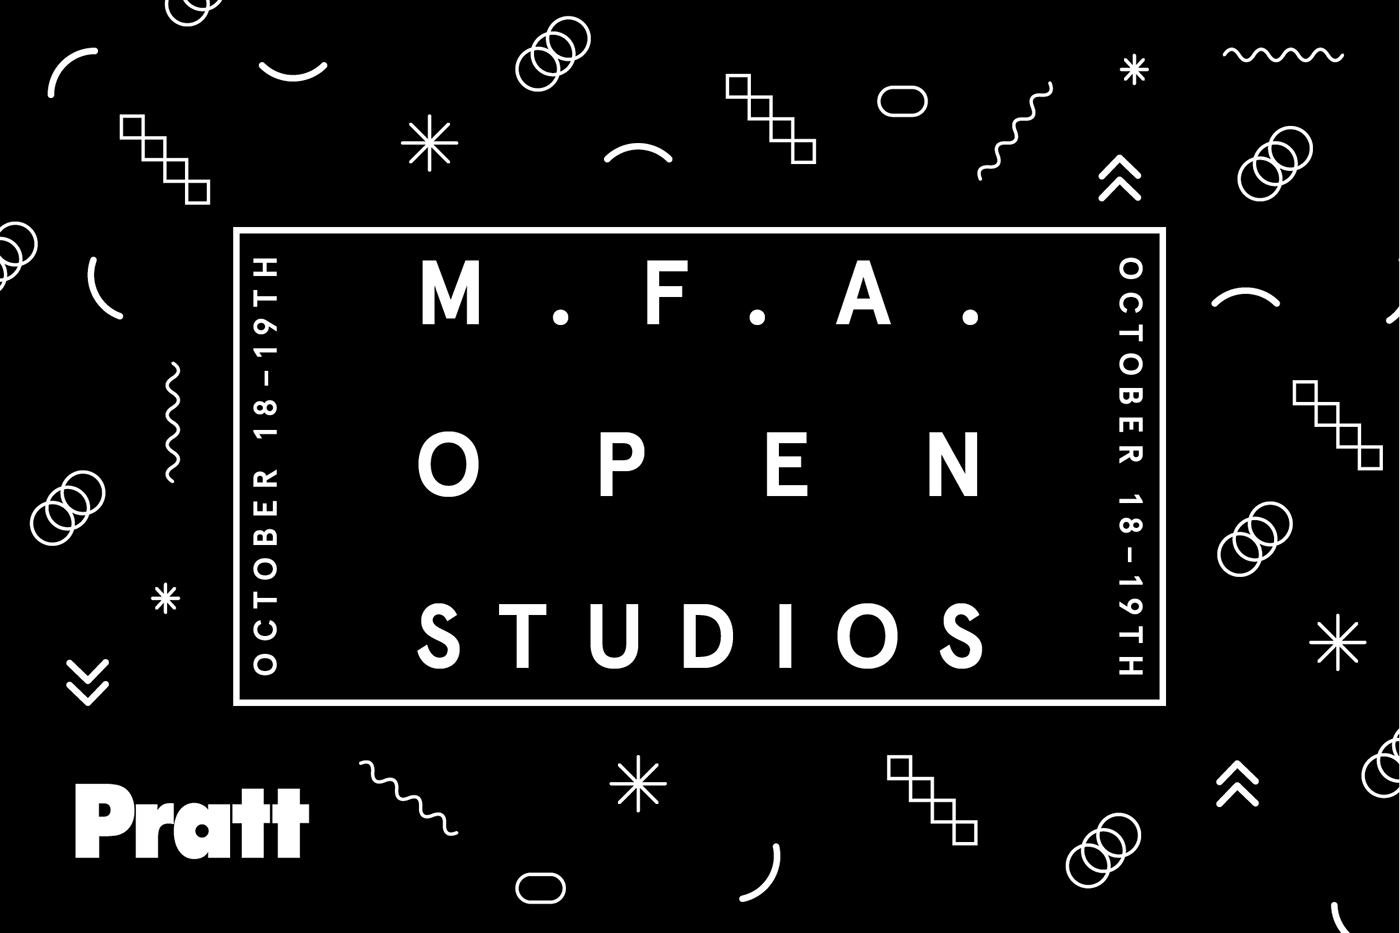 graphic design mfa Open Studios